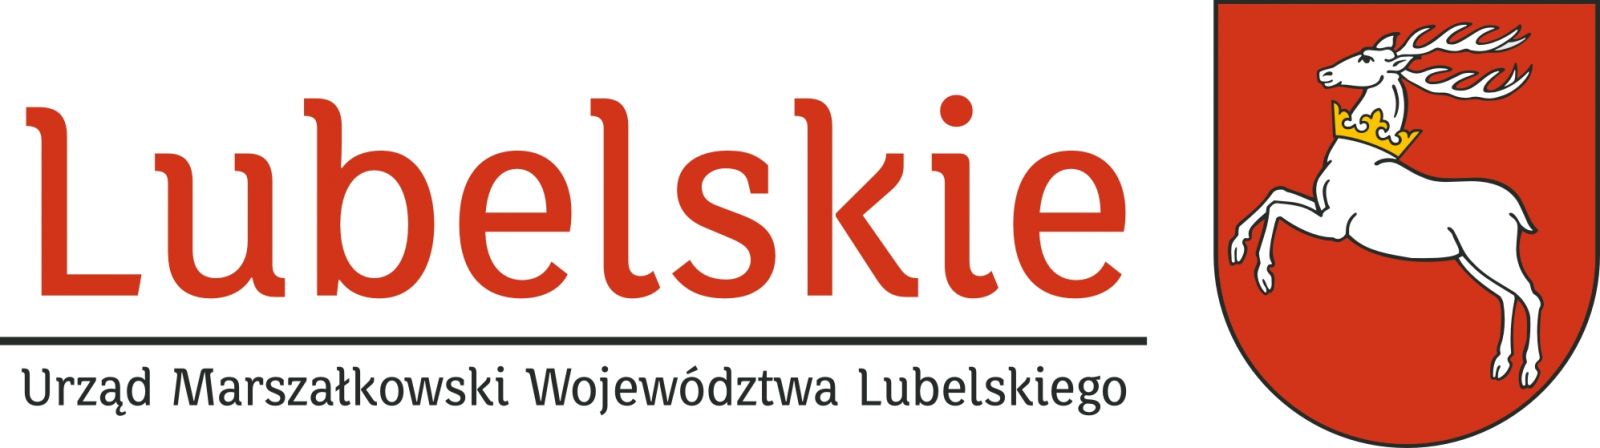 lubelskie_urzad_a.jpg